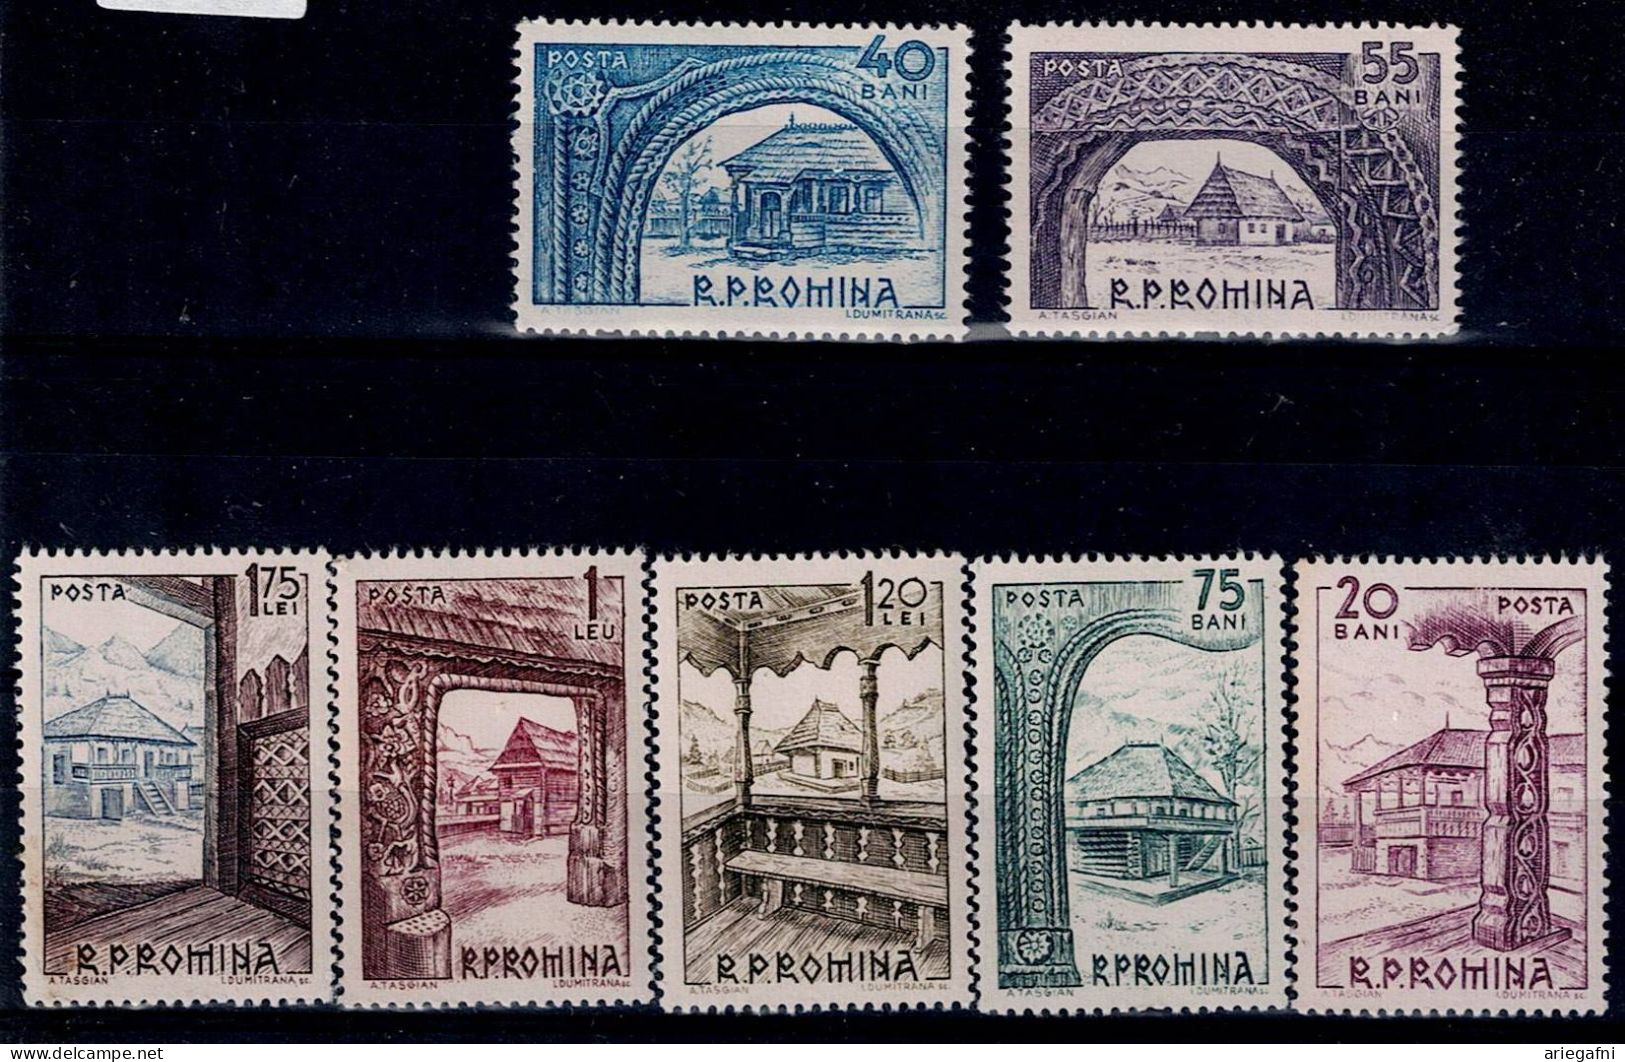 ROMANIA 1963 OPEN-AIR MUSEUM OF OLD FARMHOUSES MI No 2222-8 MNH VF!! - Ongebruikt